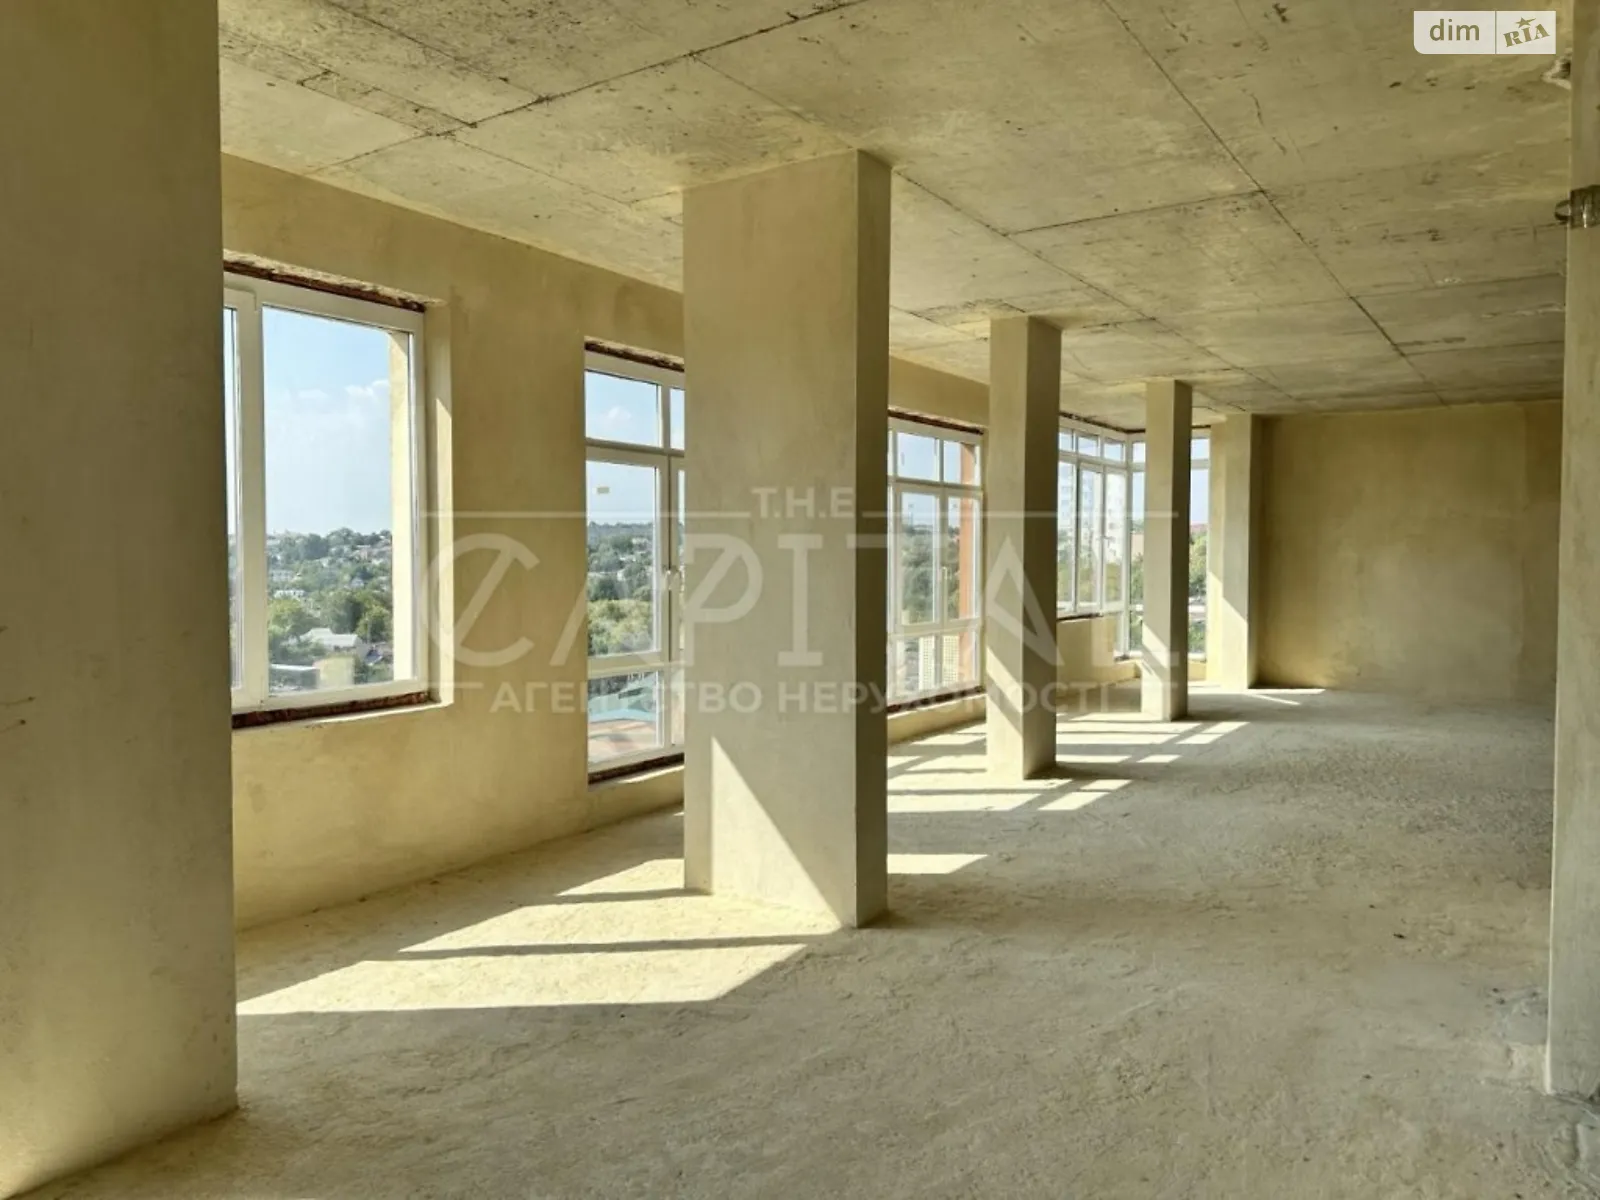 Продается 1-комнатная квартира 45.66 кв. м в Умани - фото 3